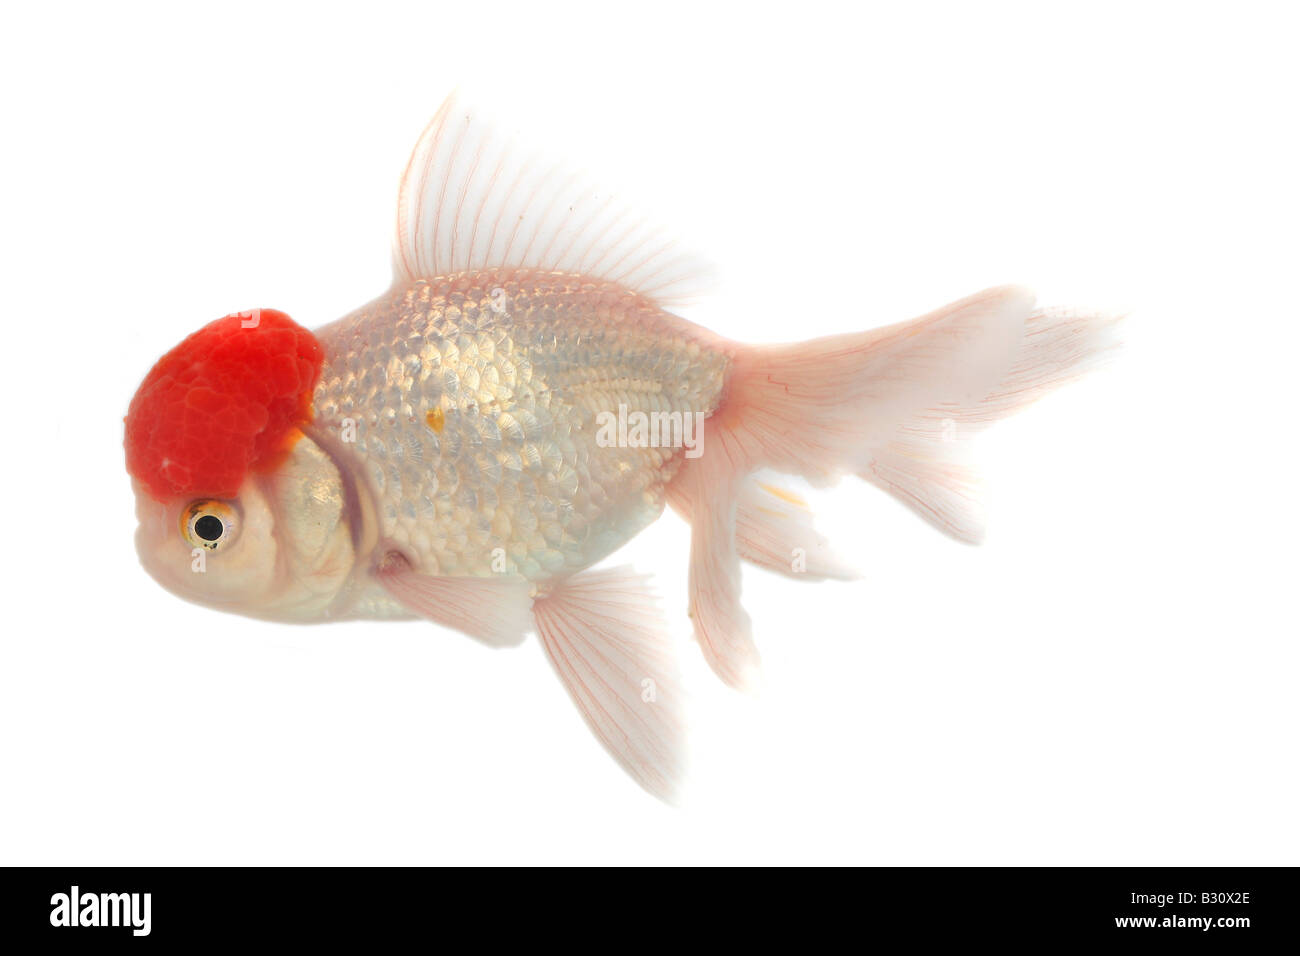 Shishigashira, Veiltail, Carassius auratus auratus, goldfish, common carp, Shishigashira, Fantail, white oranda with red cap, Stock Photo